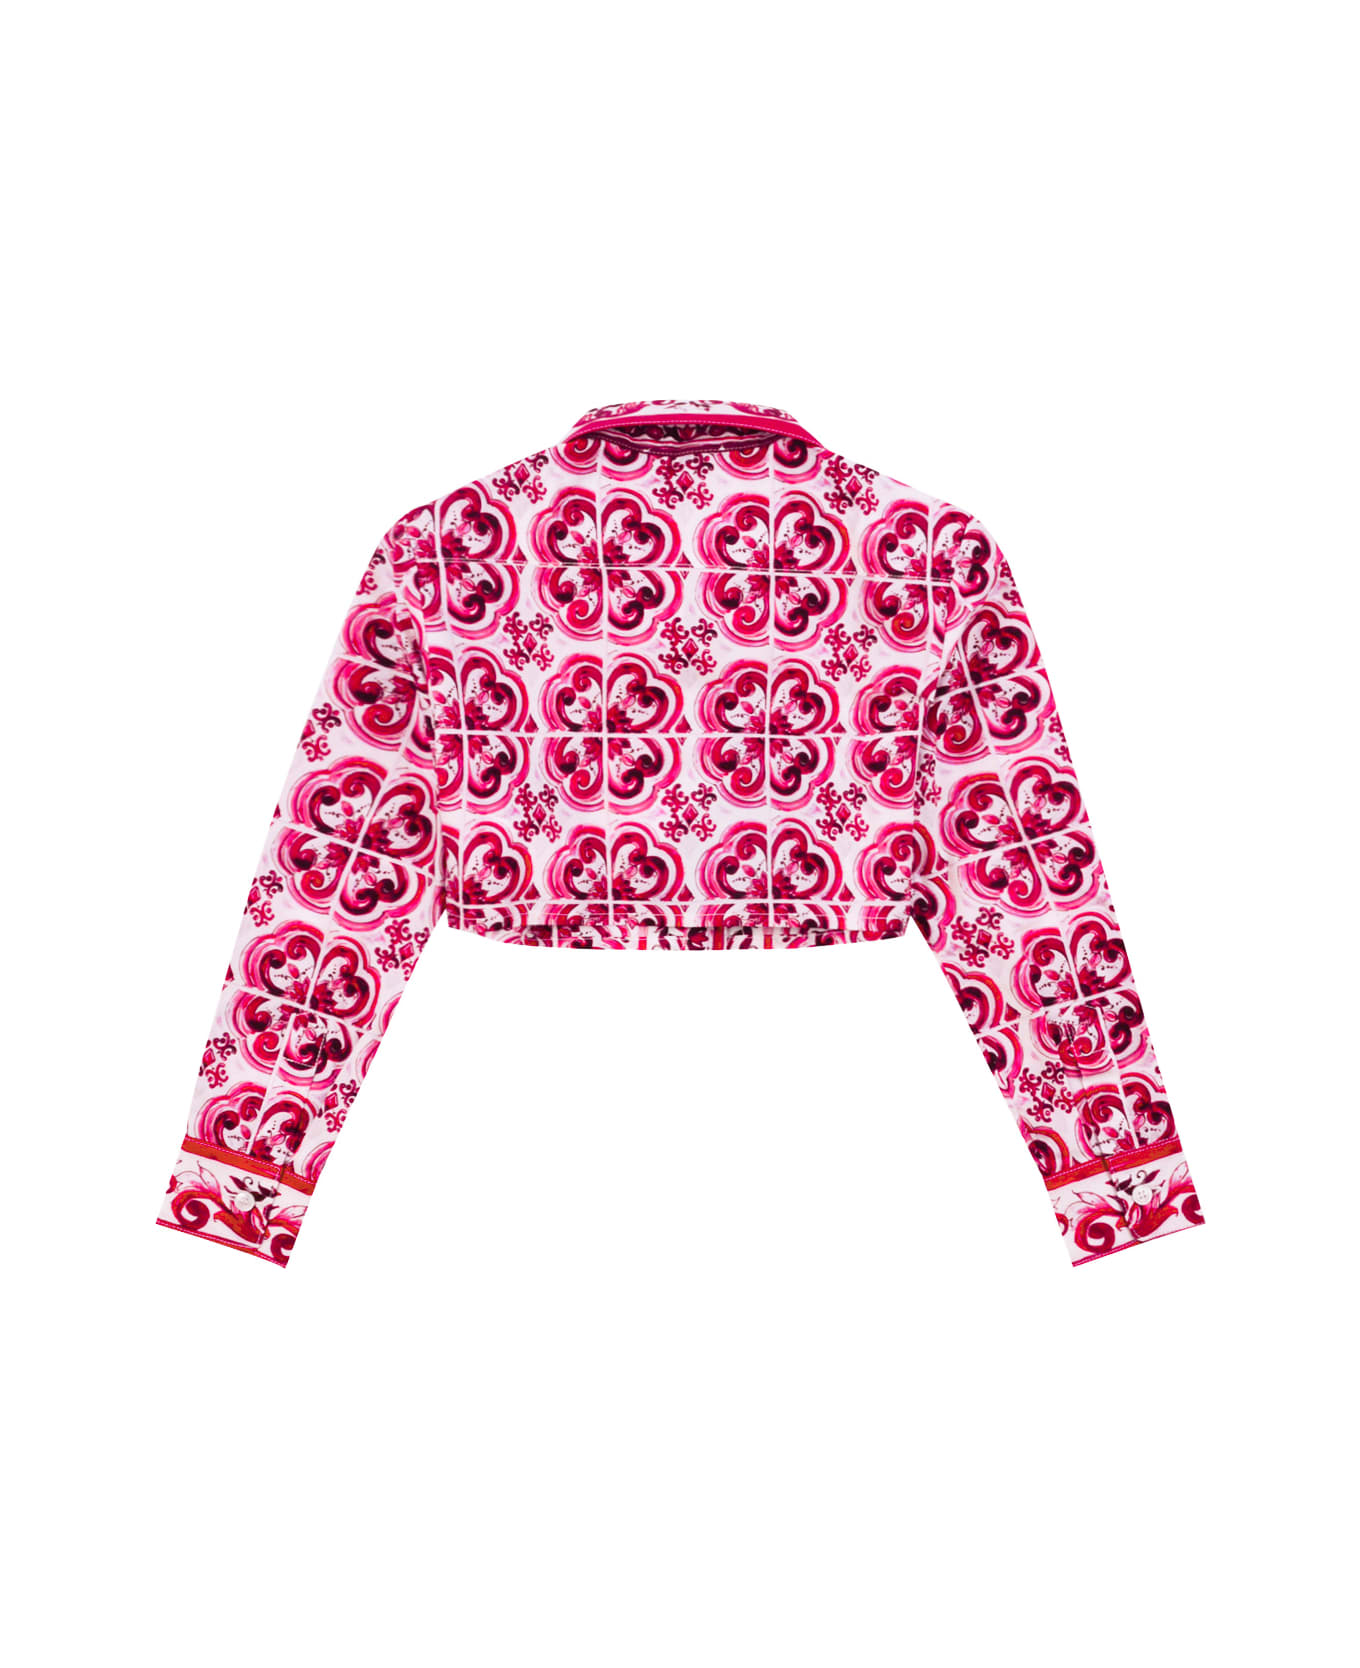 Dolce & Gabbana Short Shirt With Fuchsia Majolica Print - Pink